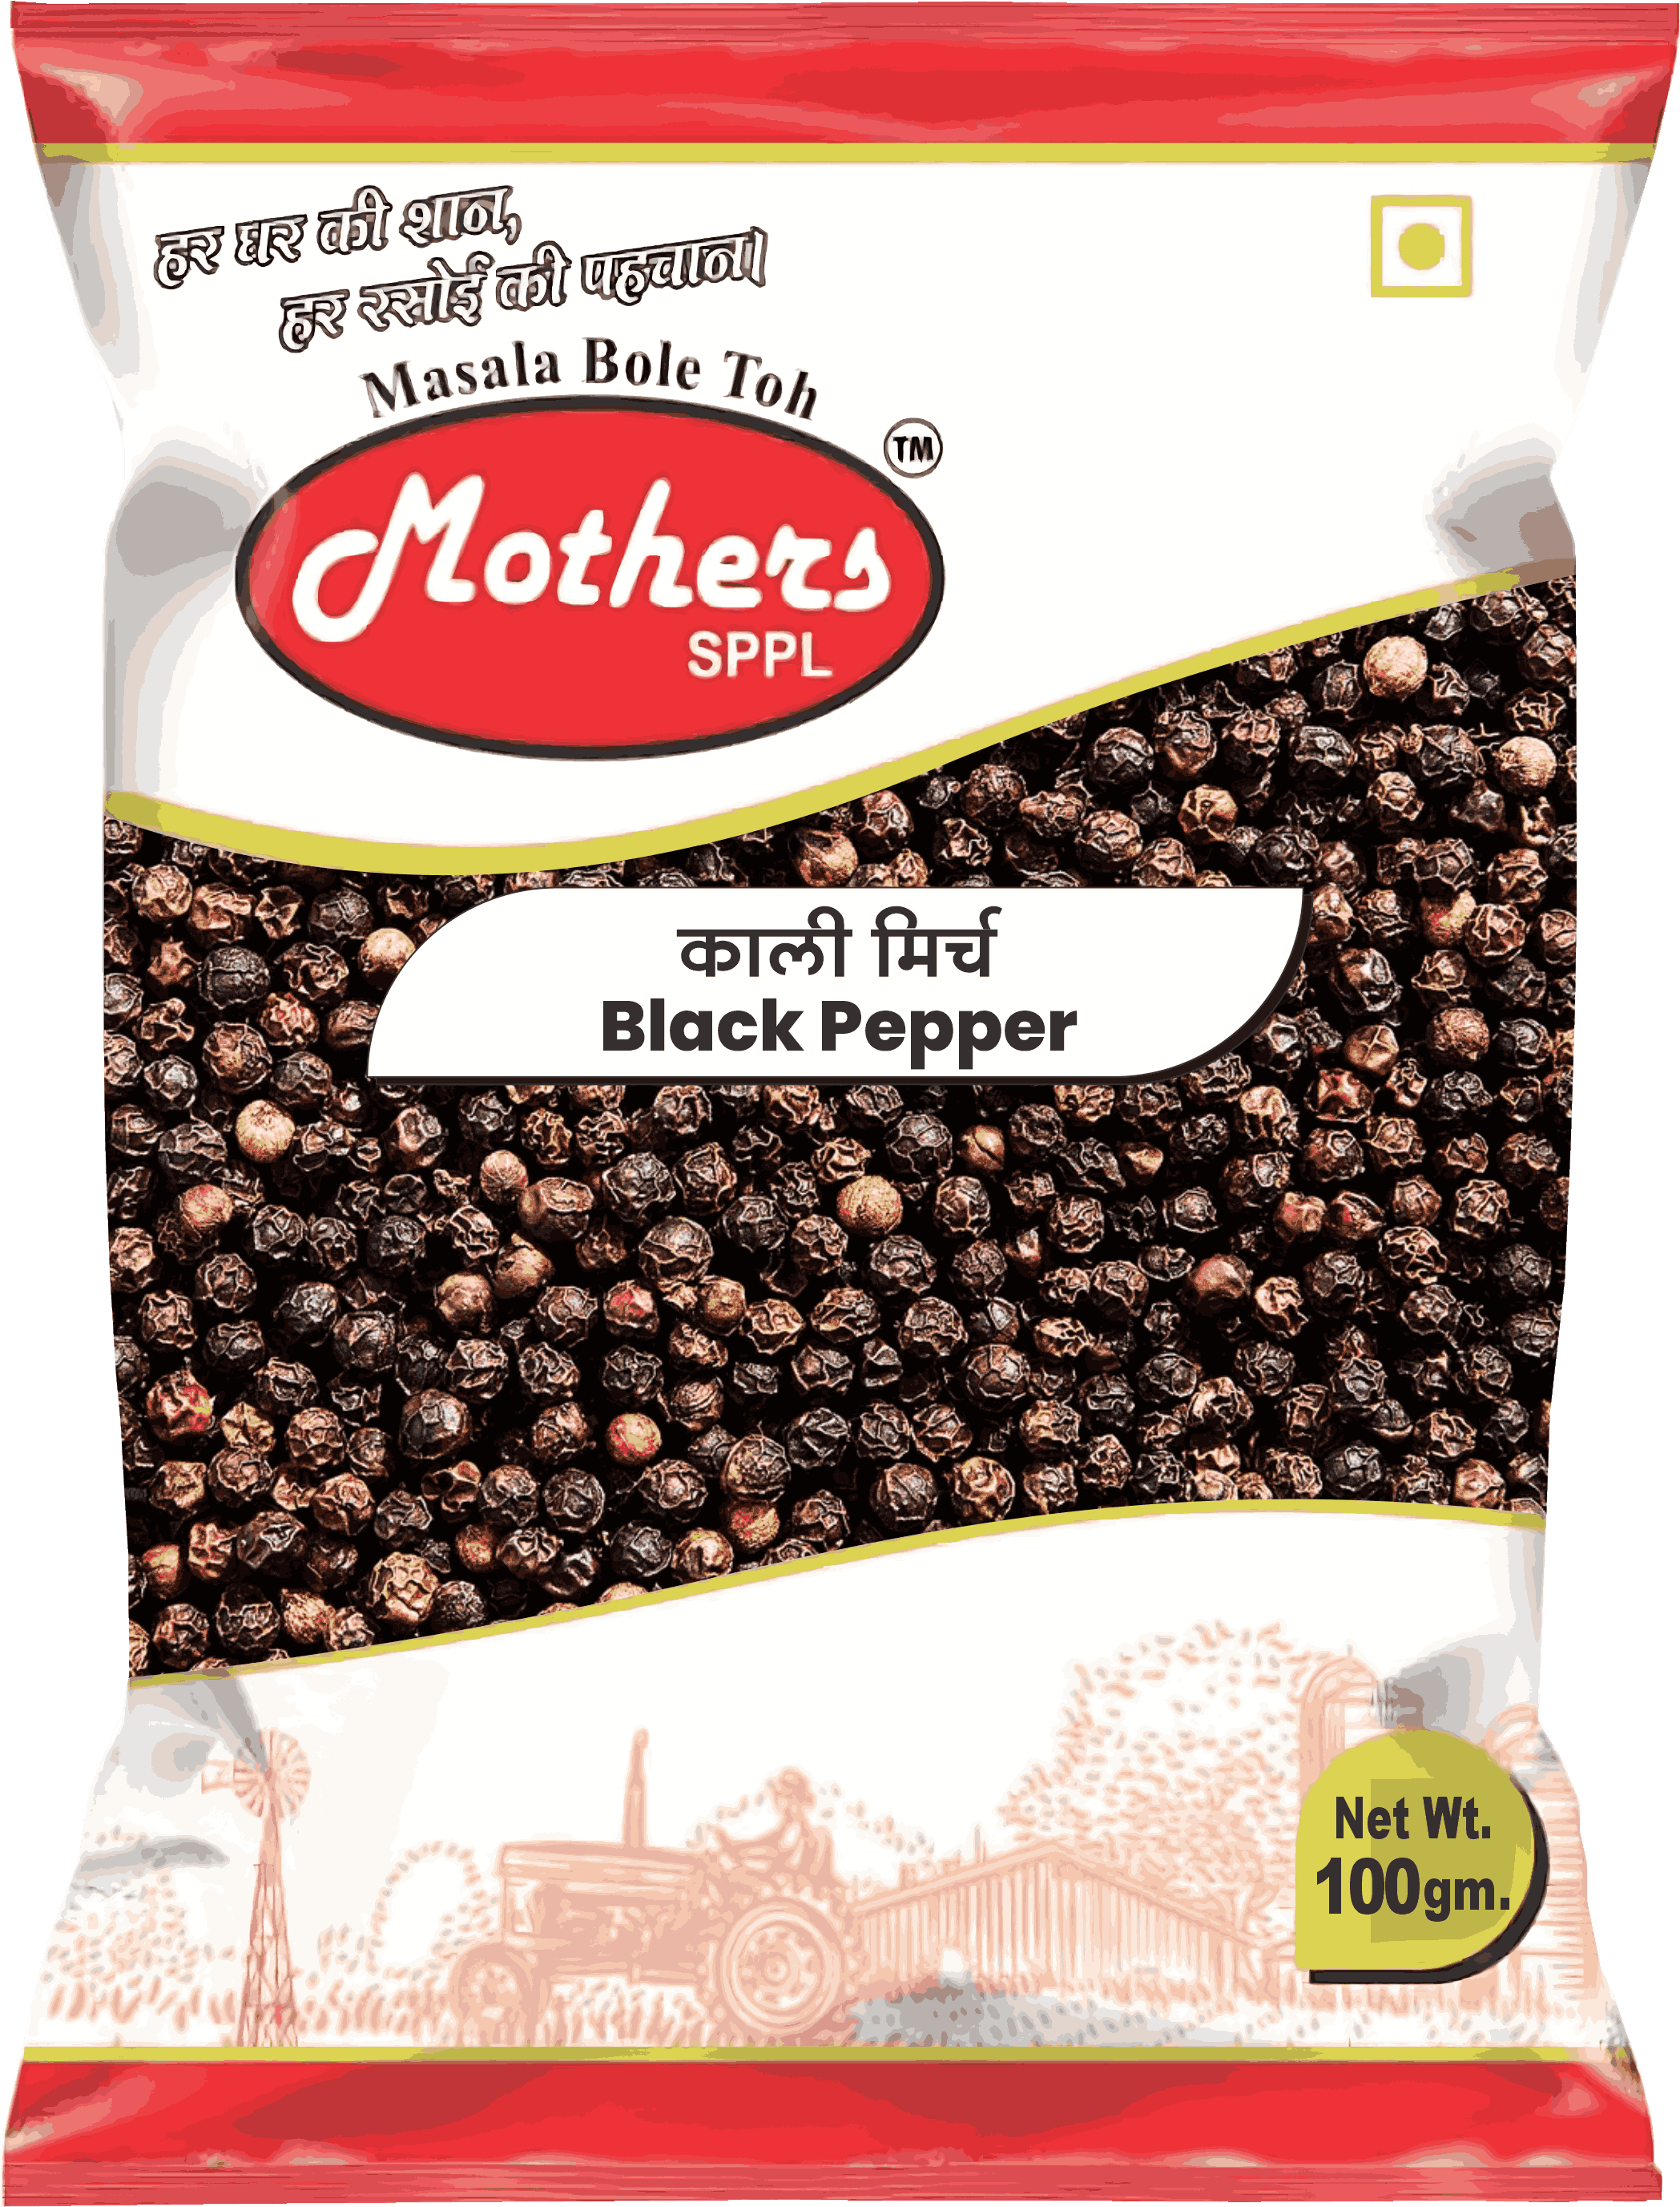 Mothers SPPL's Whole Black Pepper